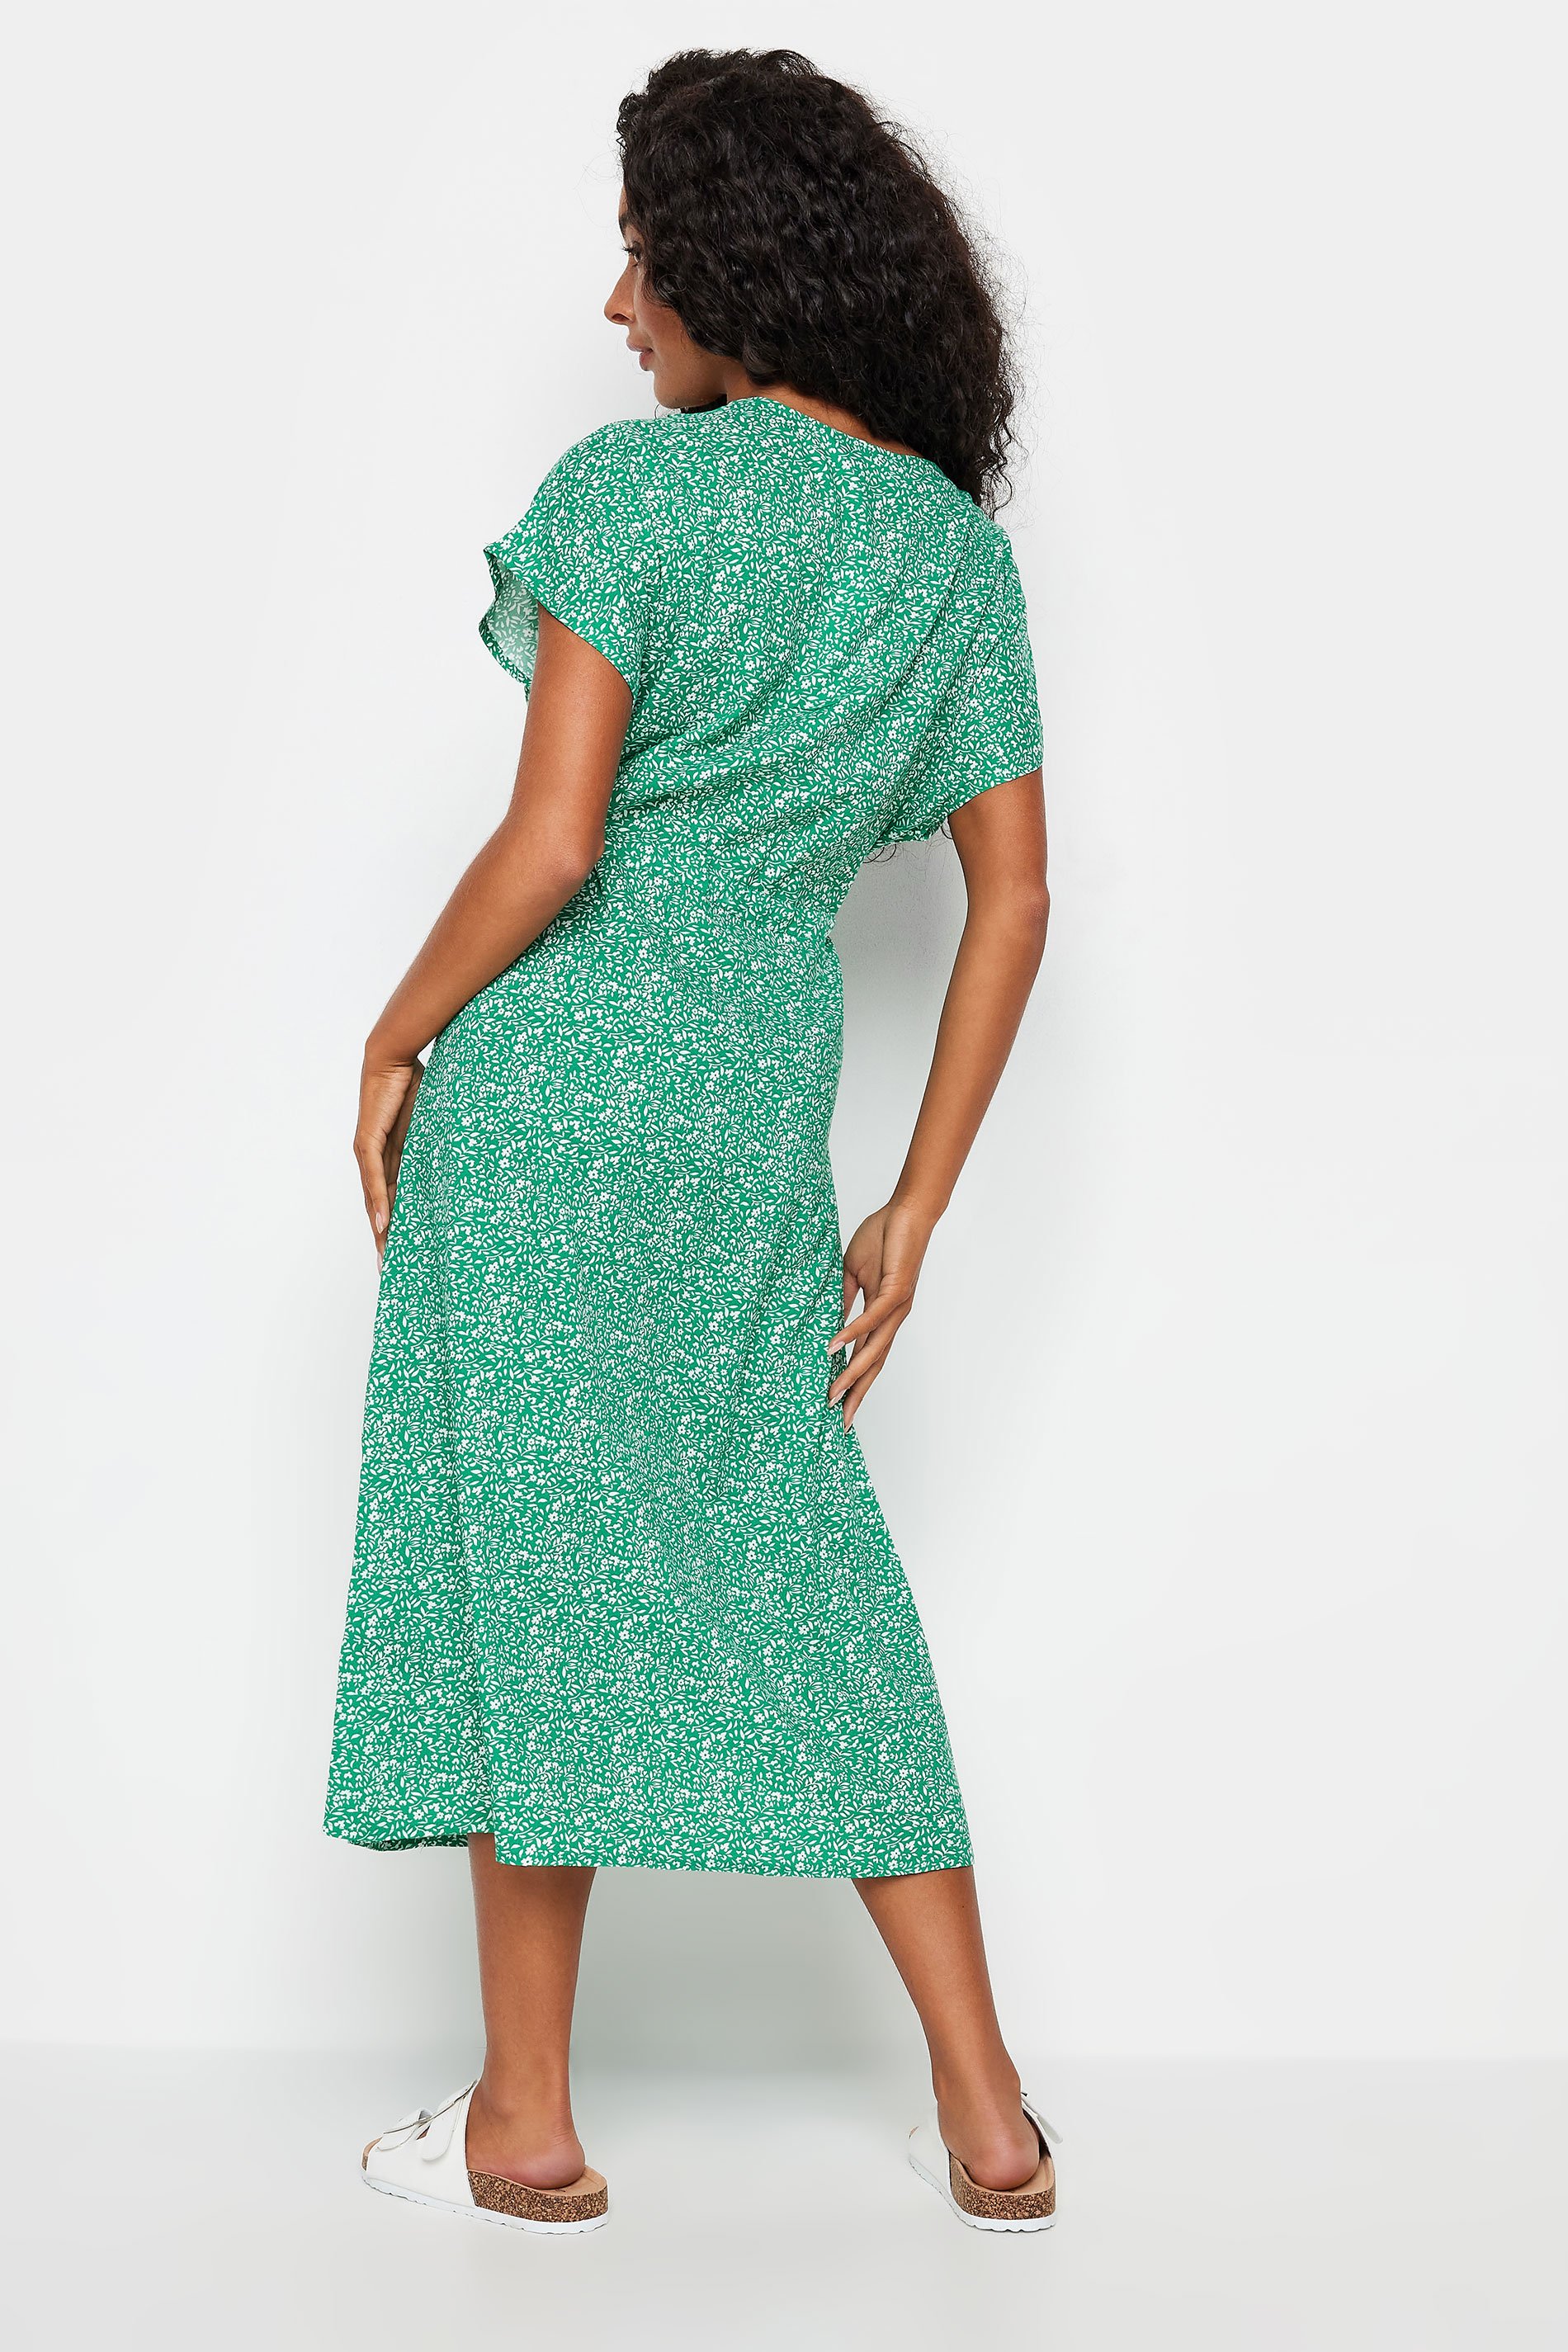 M&Co Petite Green Ditsy Floral Tie Waist Dress | M&Co 3